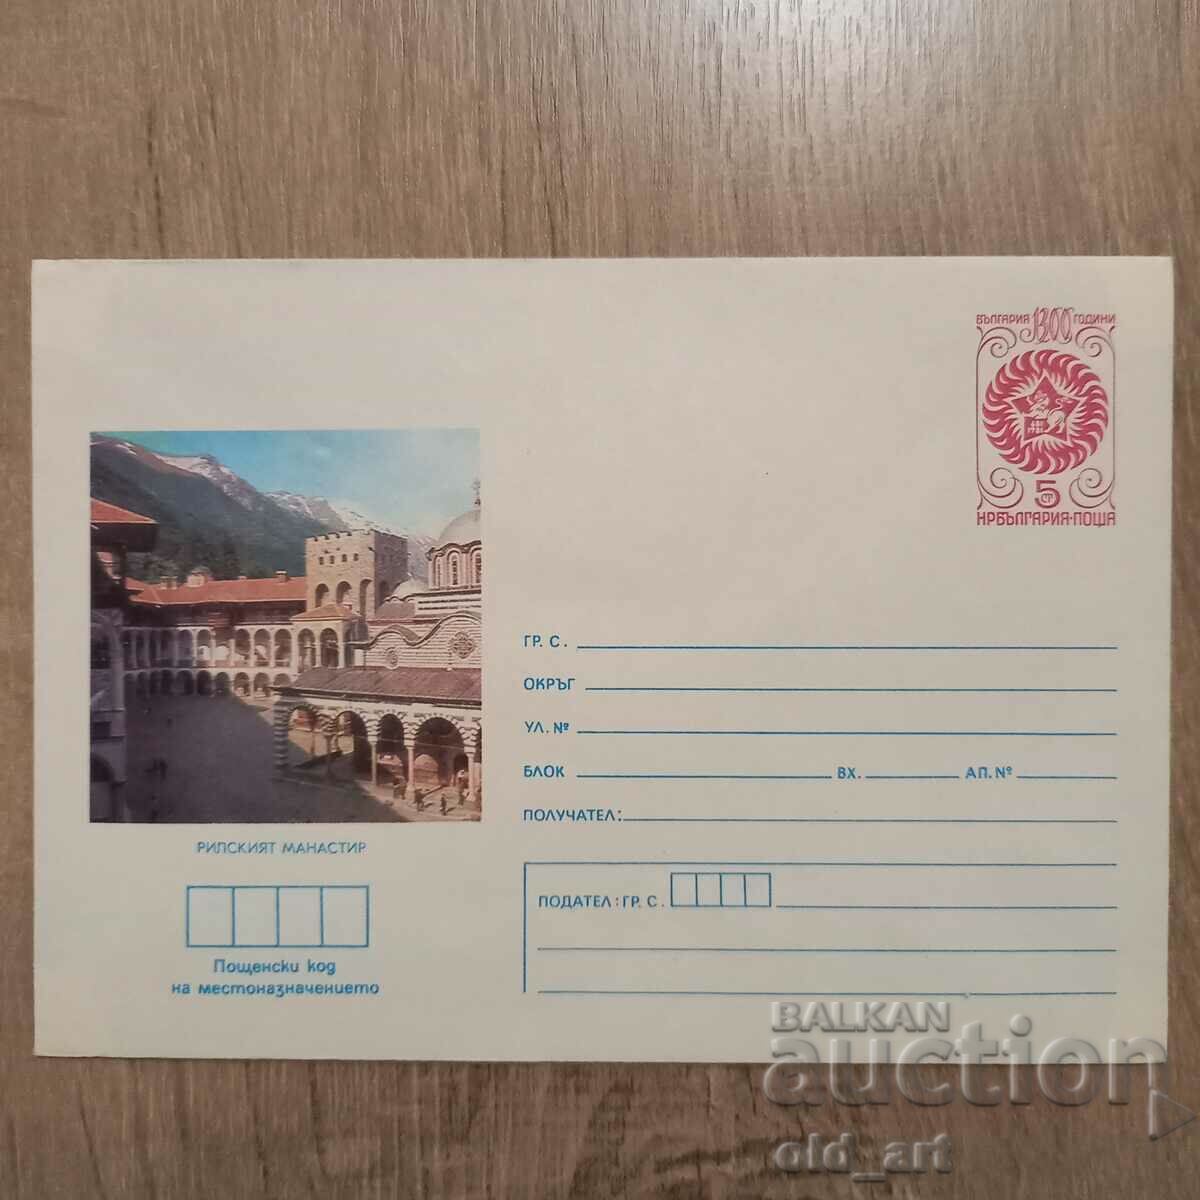 Postal envelope - Rila Monastery